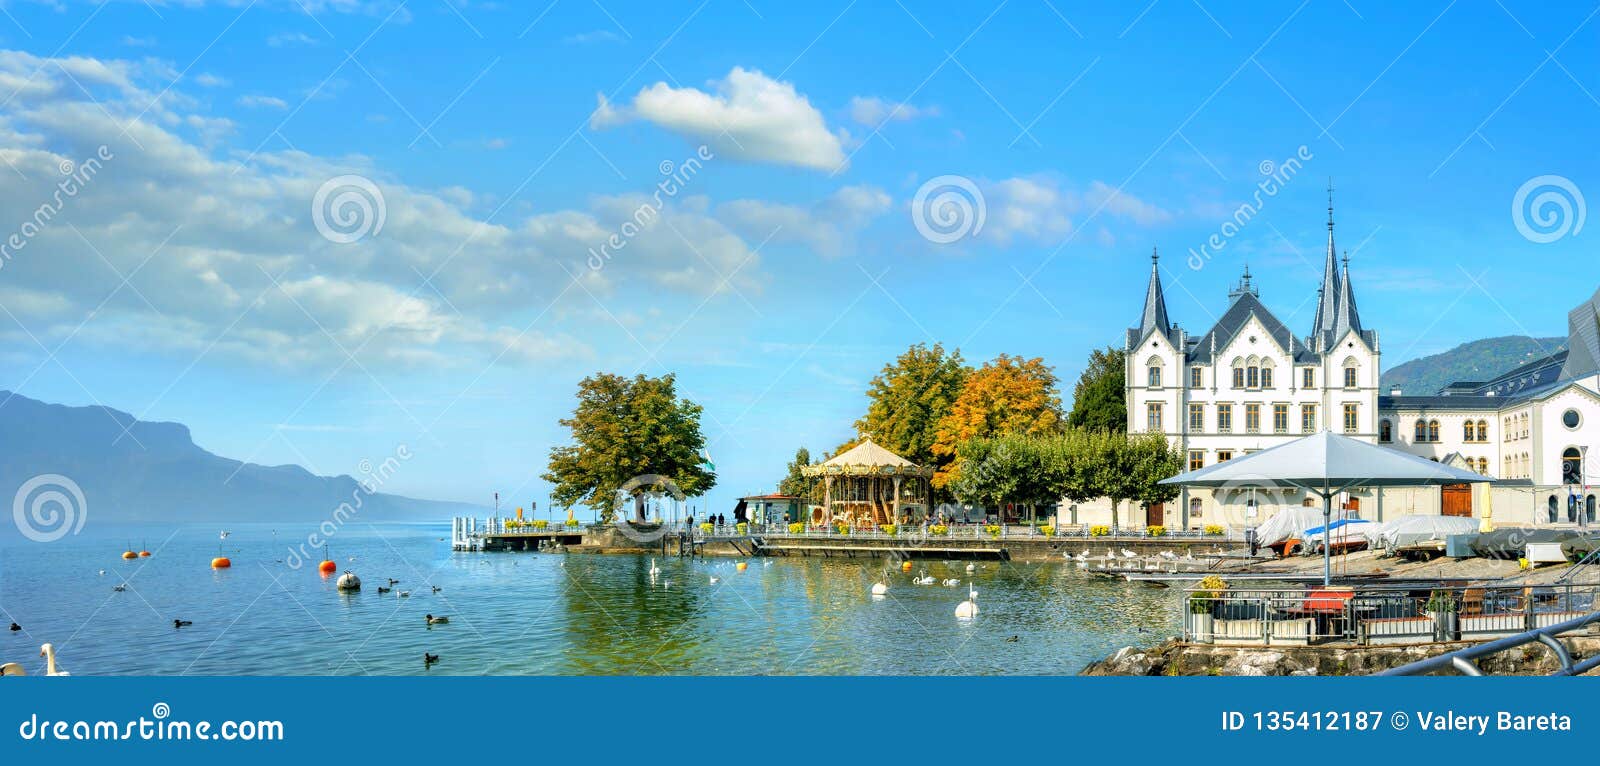 geneva lake in vevey. vaud canton, switzerland